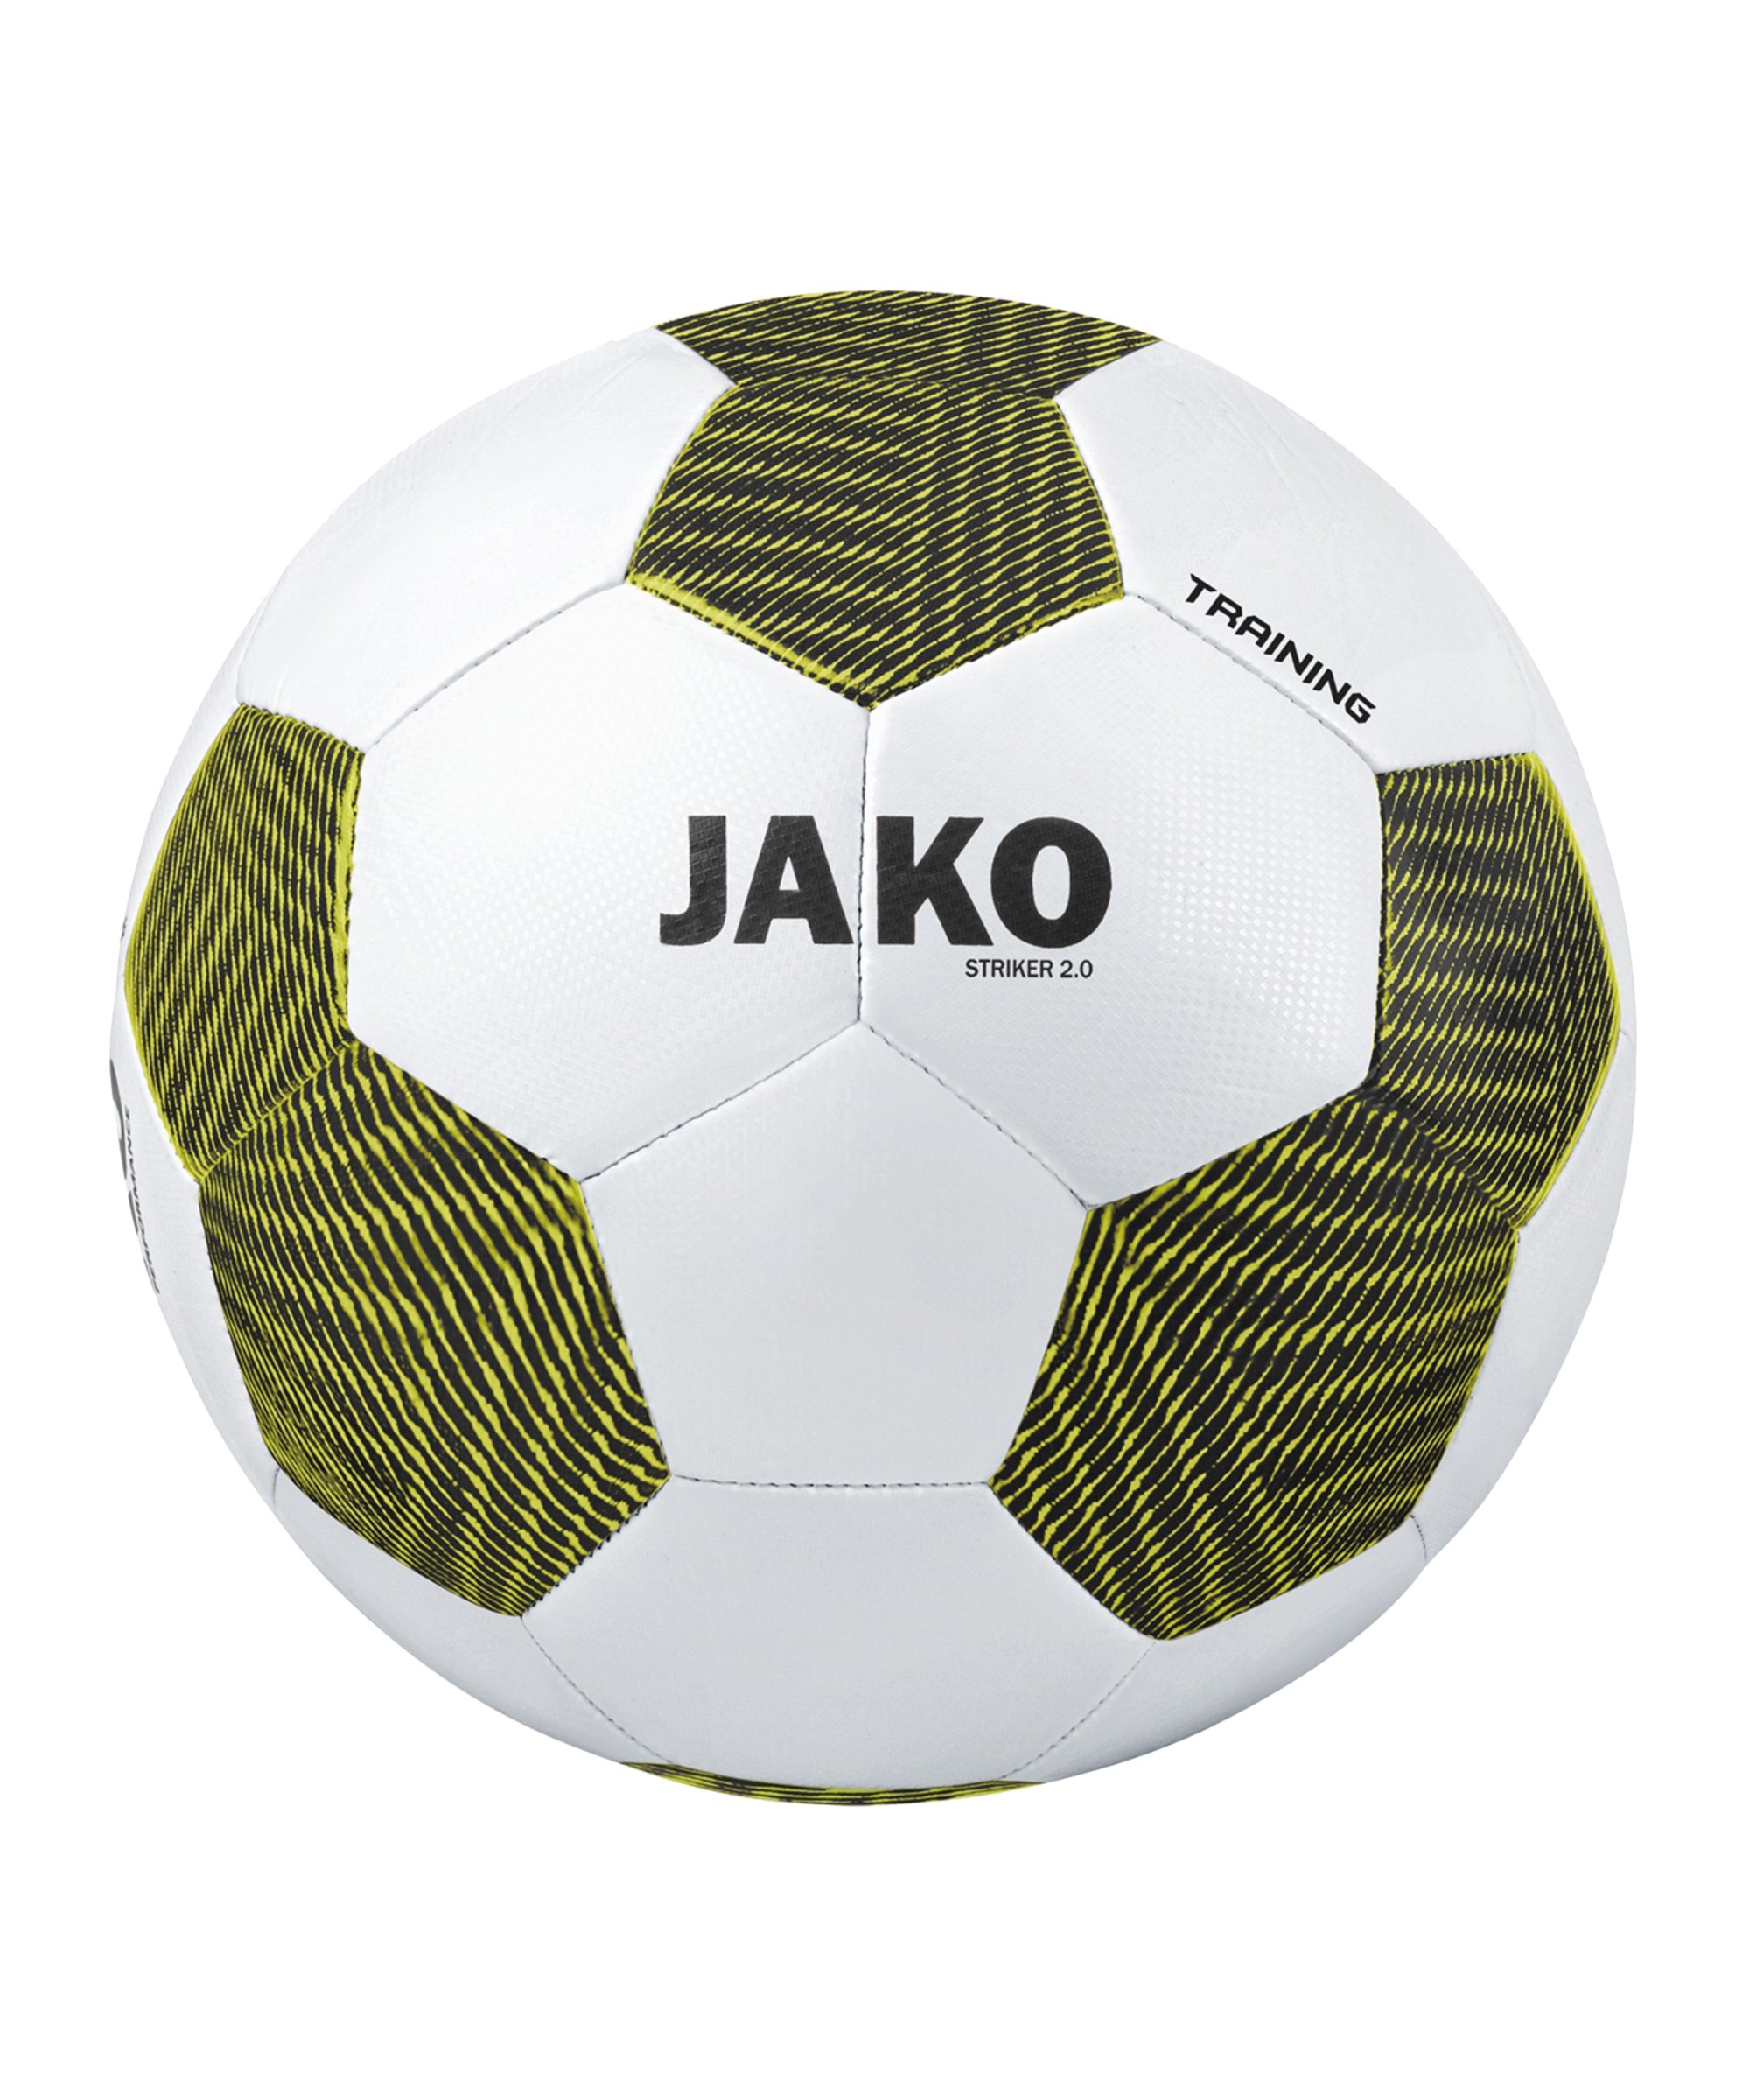 JAKO Striker 2.0 Trainingsball Weiss Gelb F704 - weiss